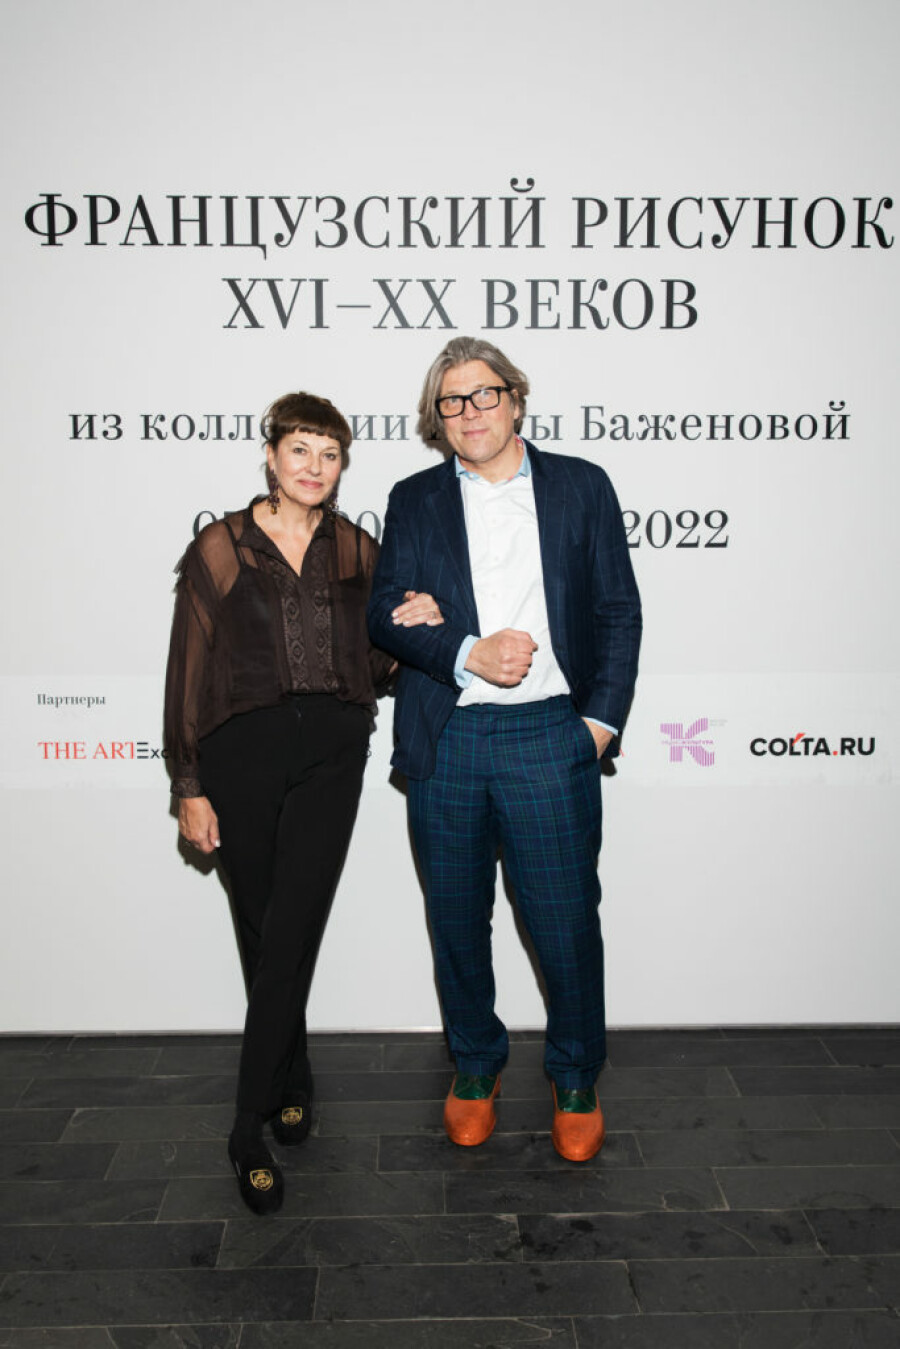 Татьяна Сахокия, The Art Newspaper Russia, Алексей Поляков, Сбер
